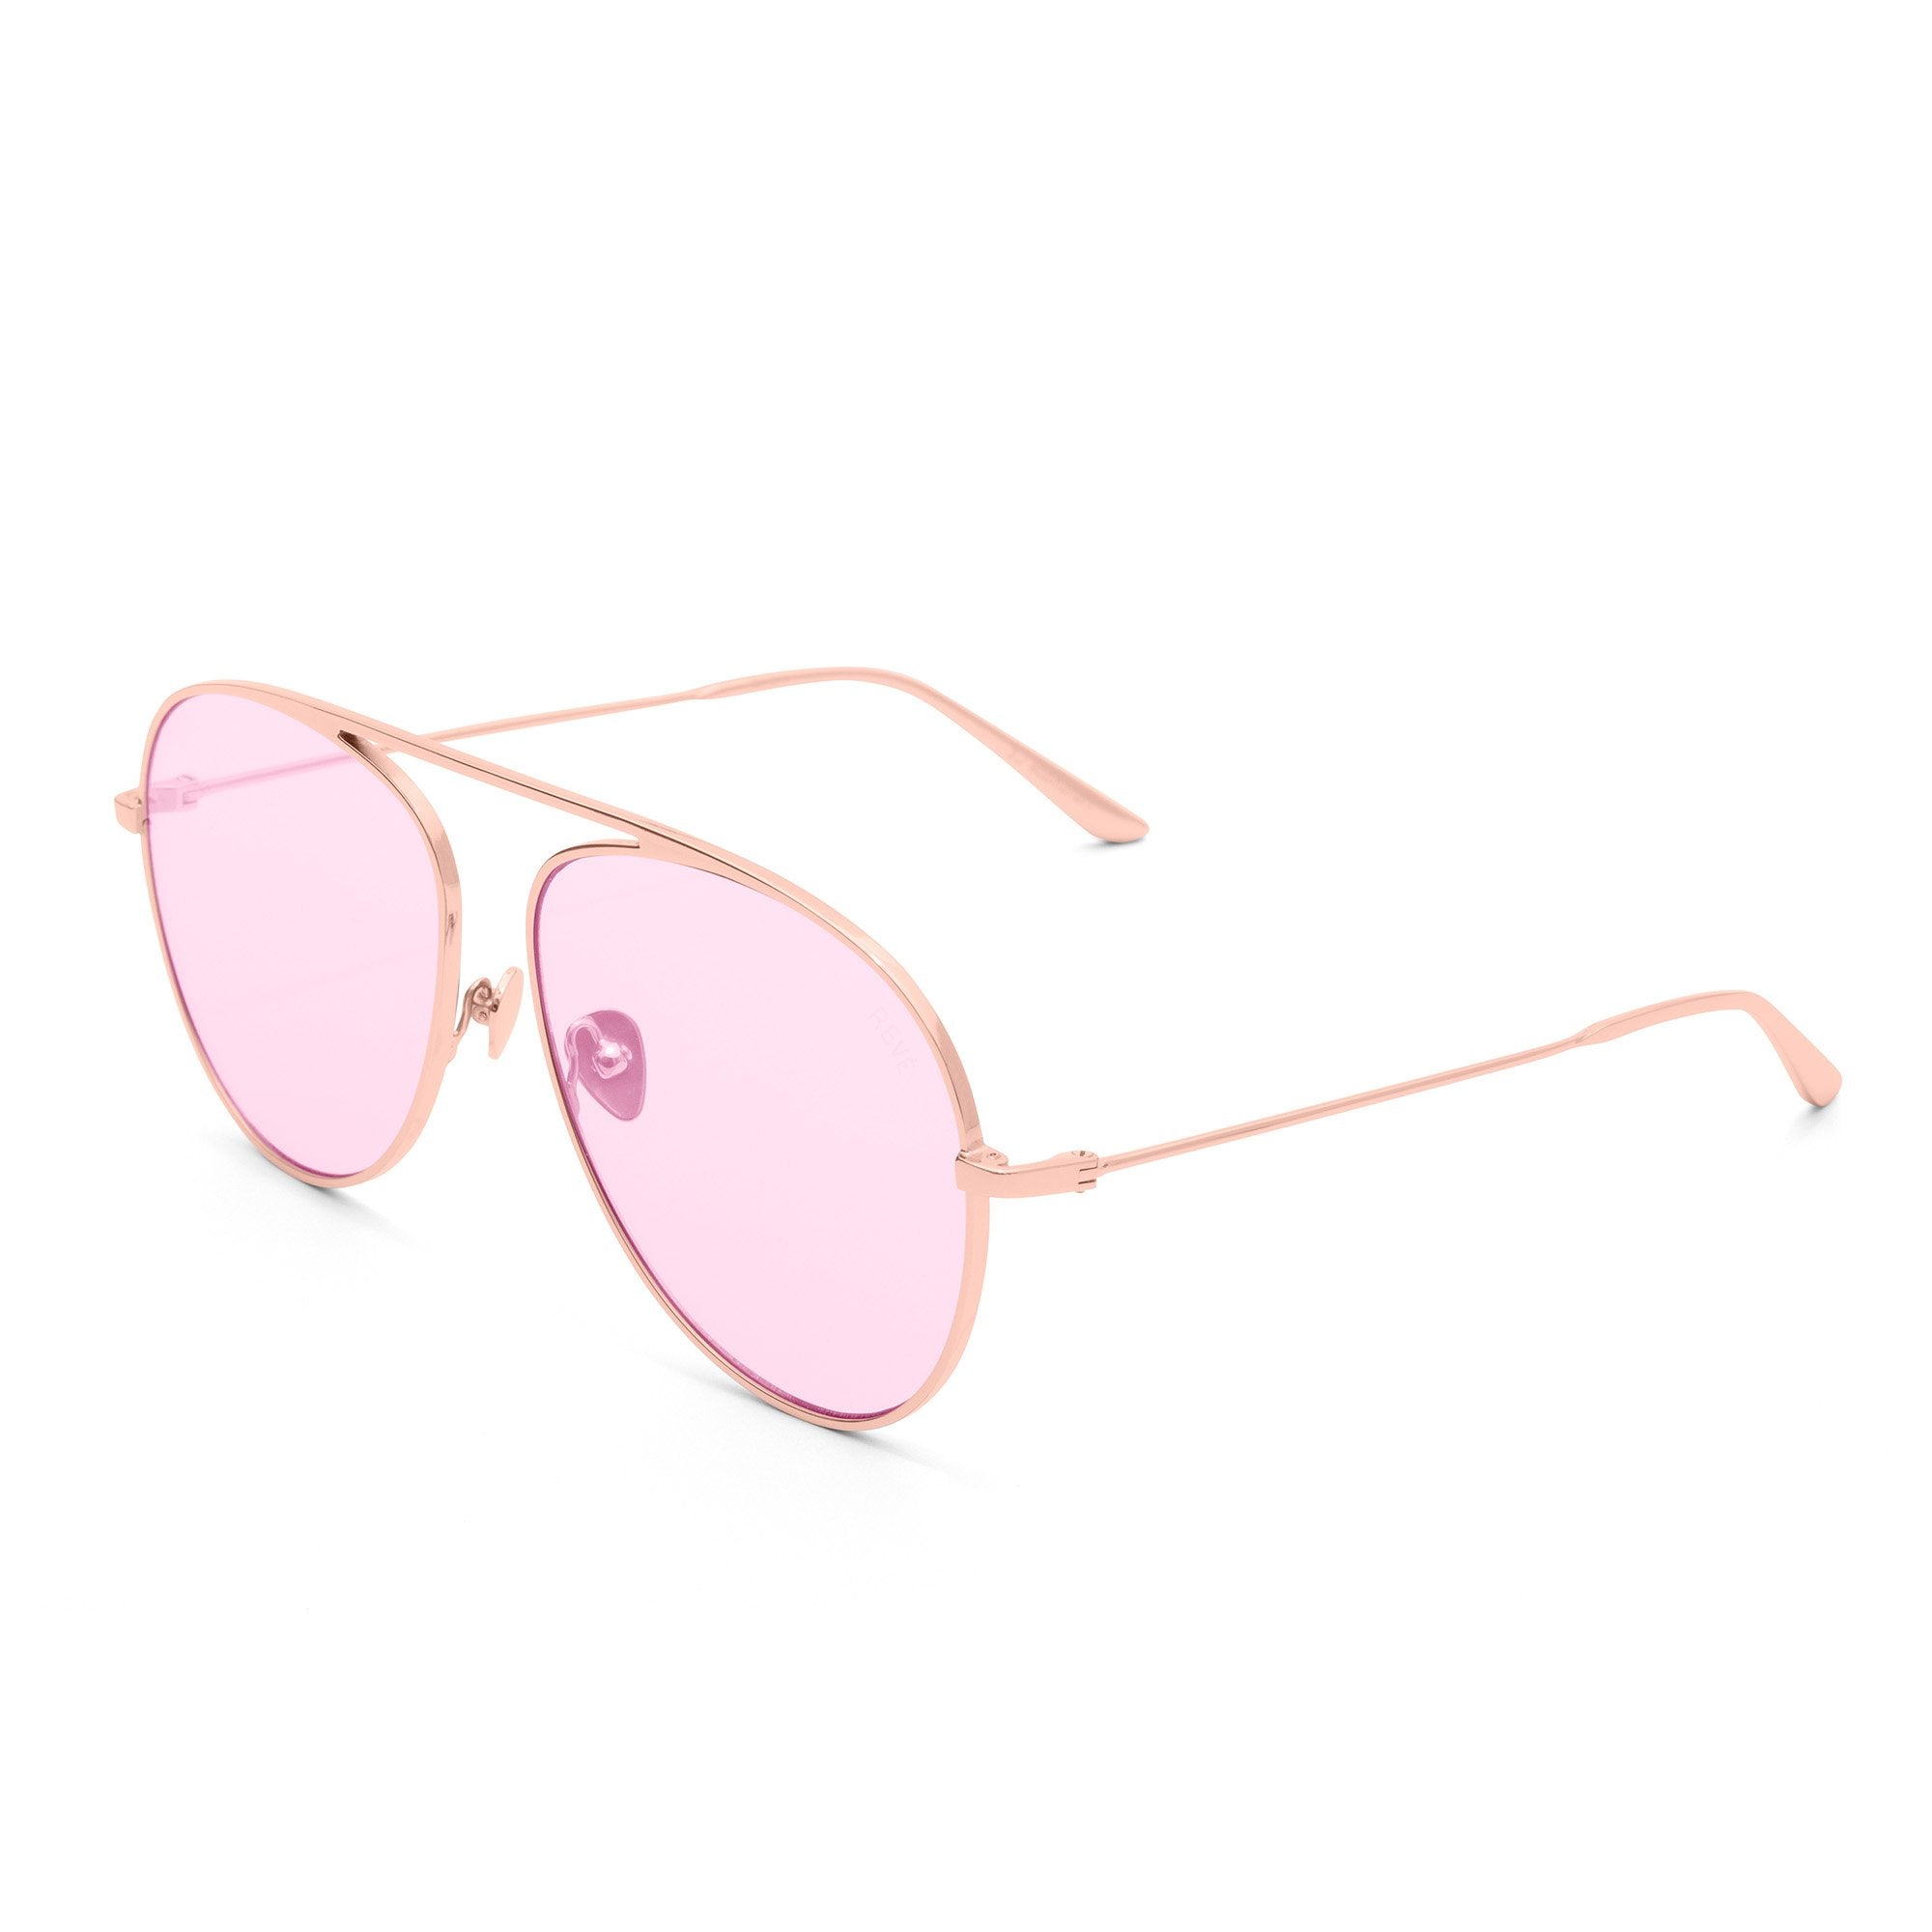 REVE by RENE Jellybean aviator sunglasses | pink sunglasses